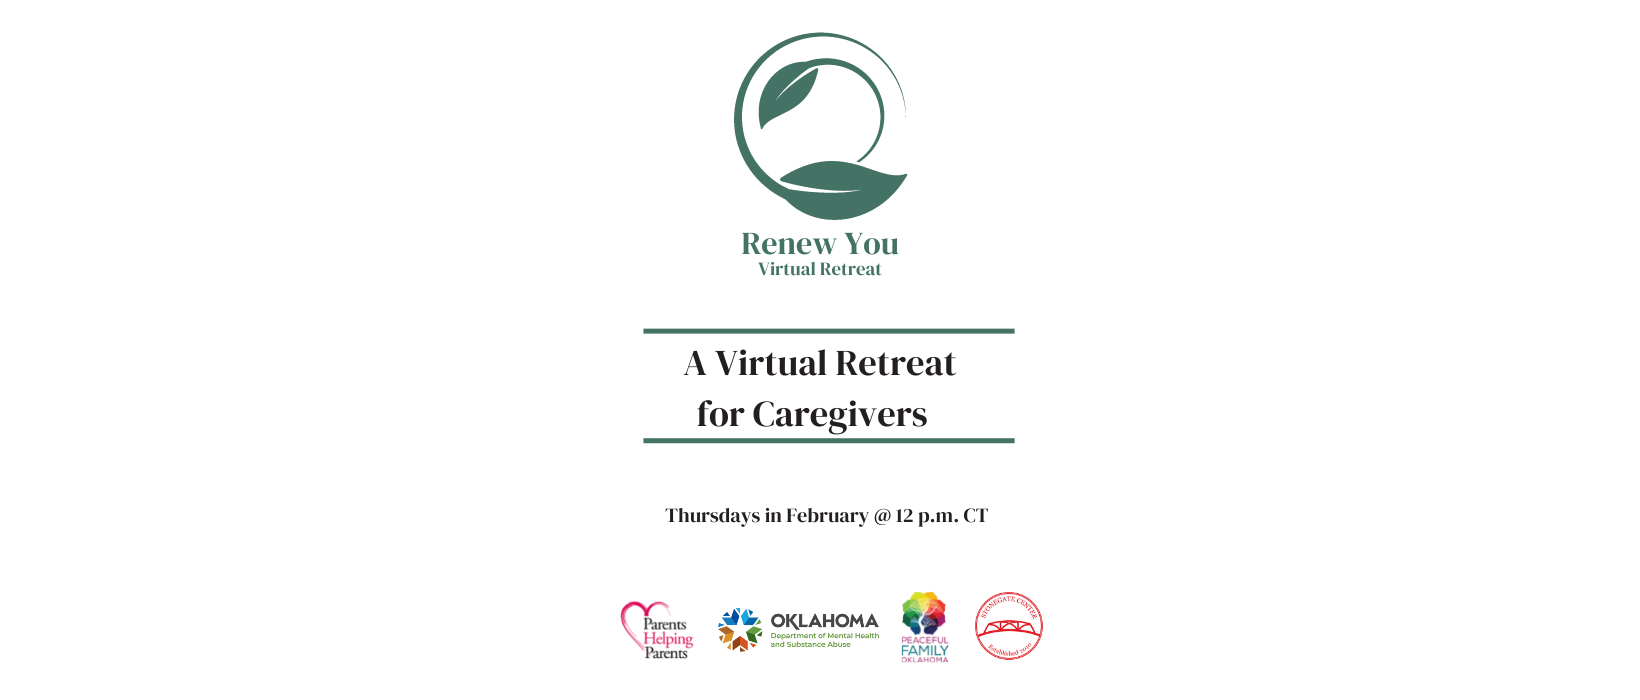 Renew You, a Virtual Retreat for Caregivers